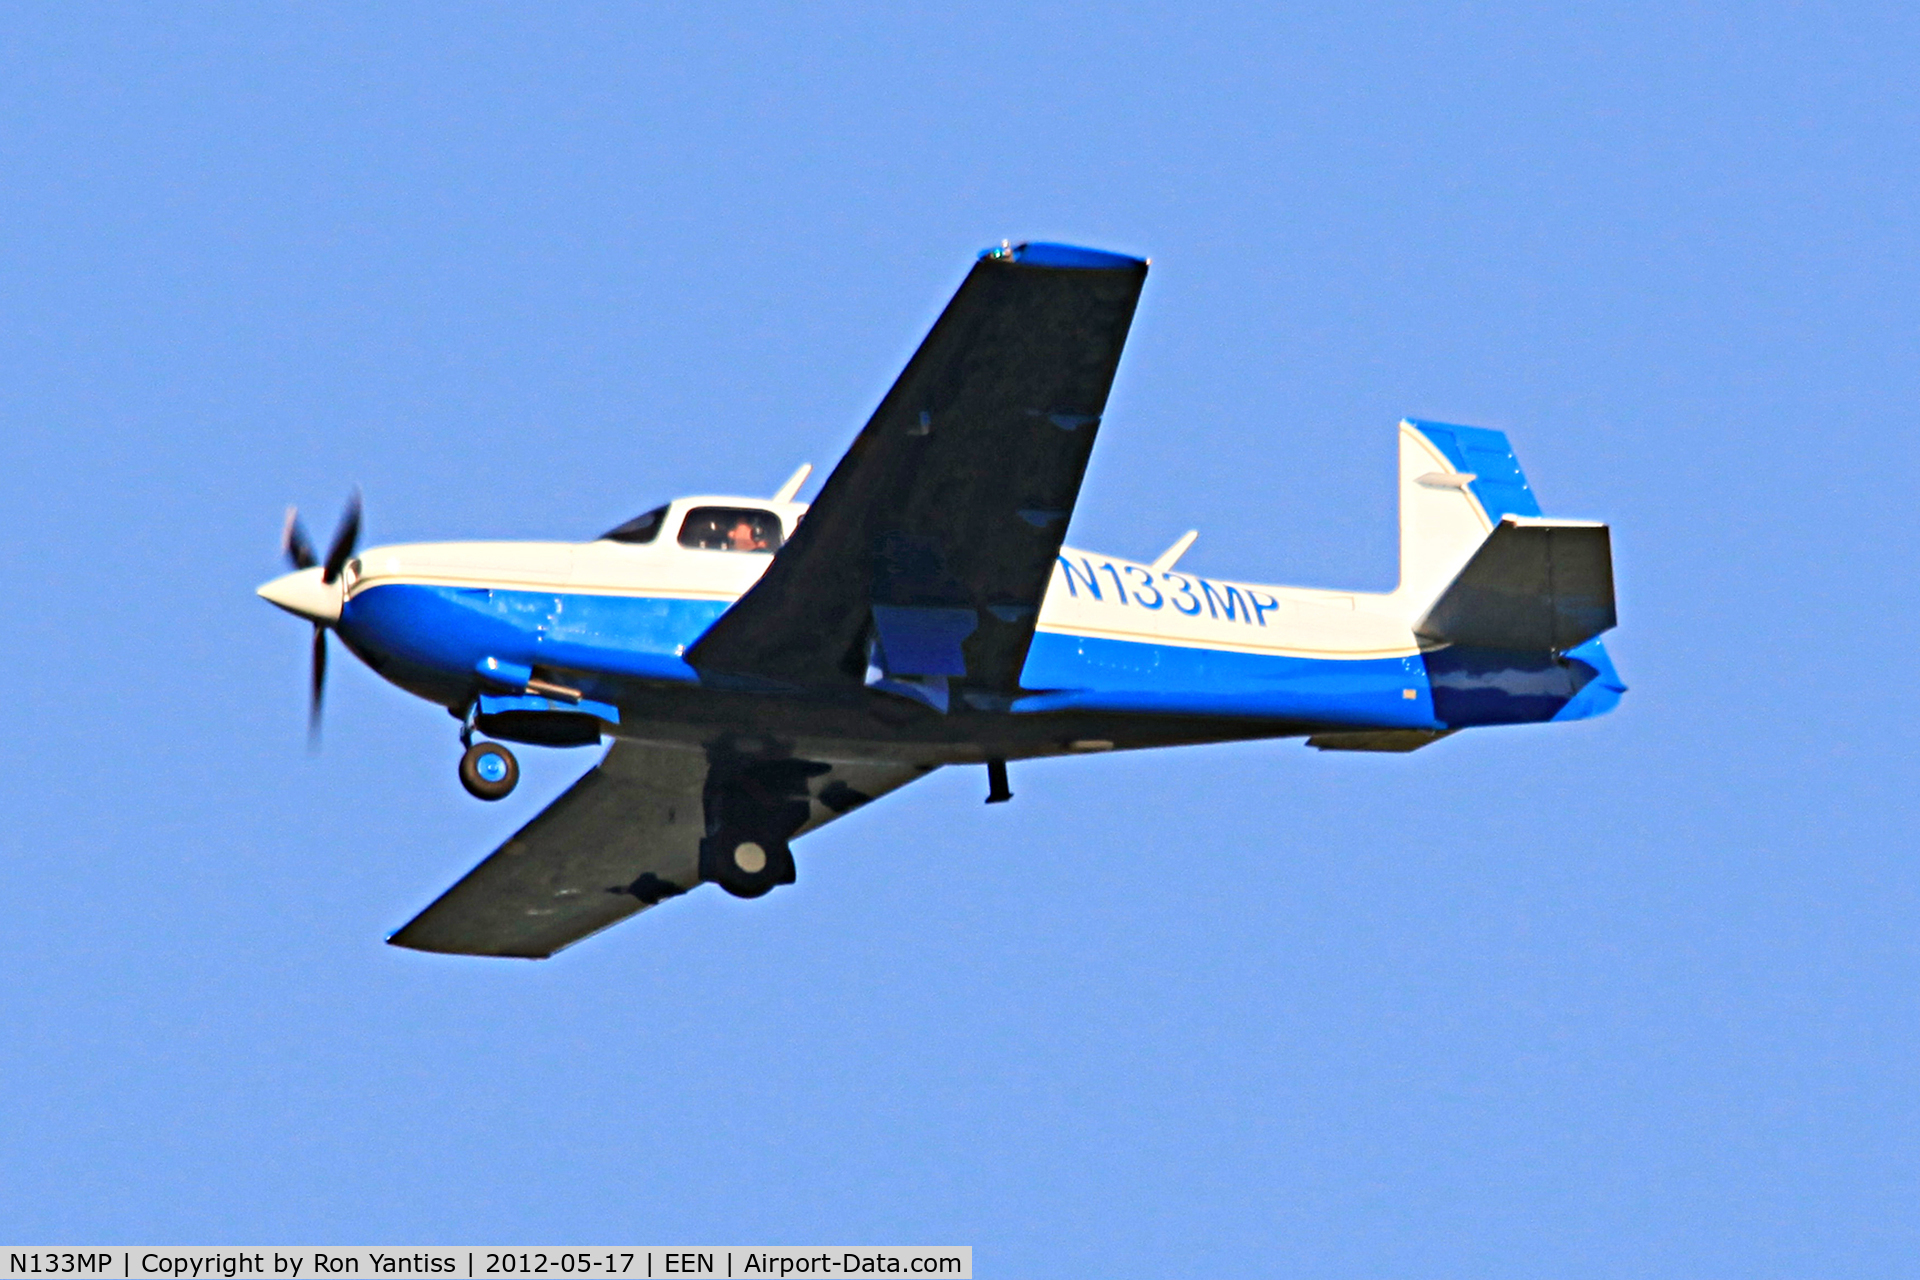 N133MP, Mooney M20L PFM C/N 26-0012, Practice ILS approach, runway 02, Dillant-Hopkins Airport, Keene, NH